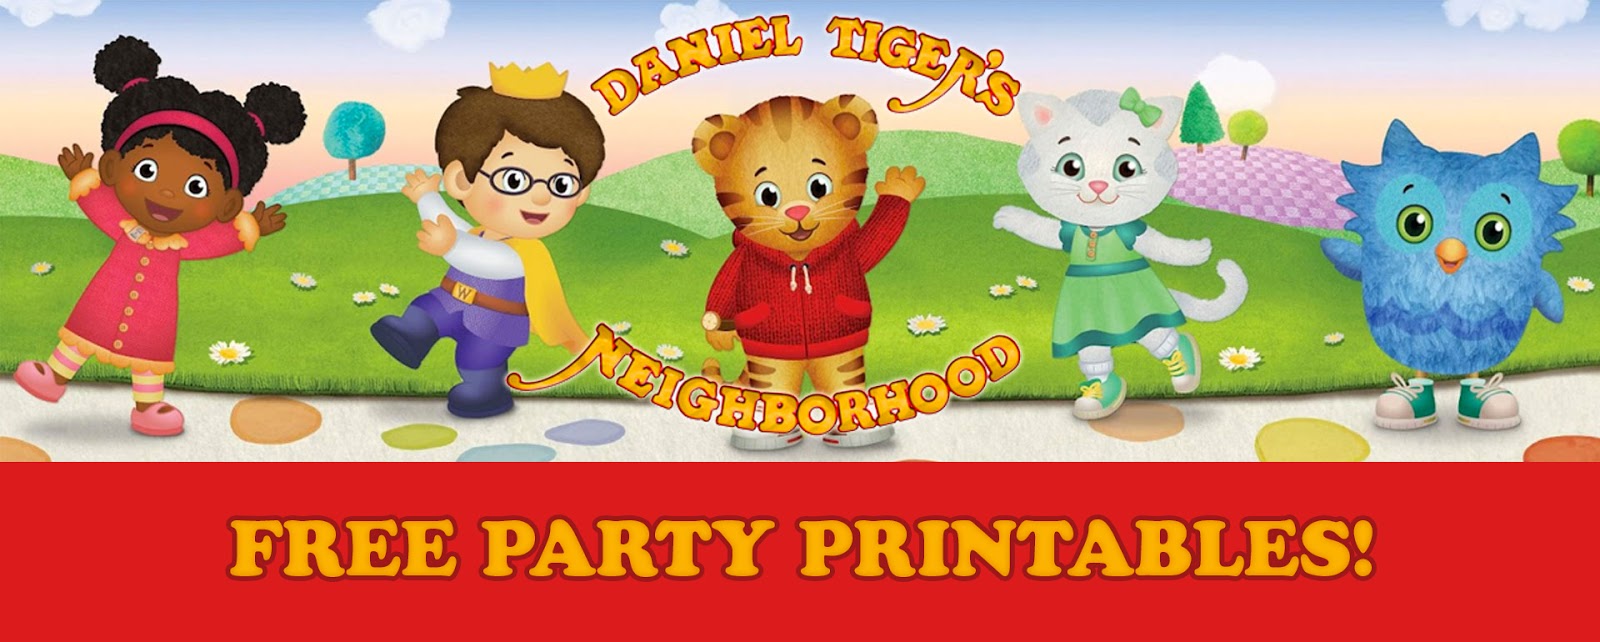 LuvibeeKids Co Blog Daniel Tiger Birthday Party Printables FREE 